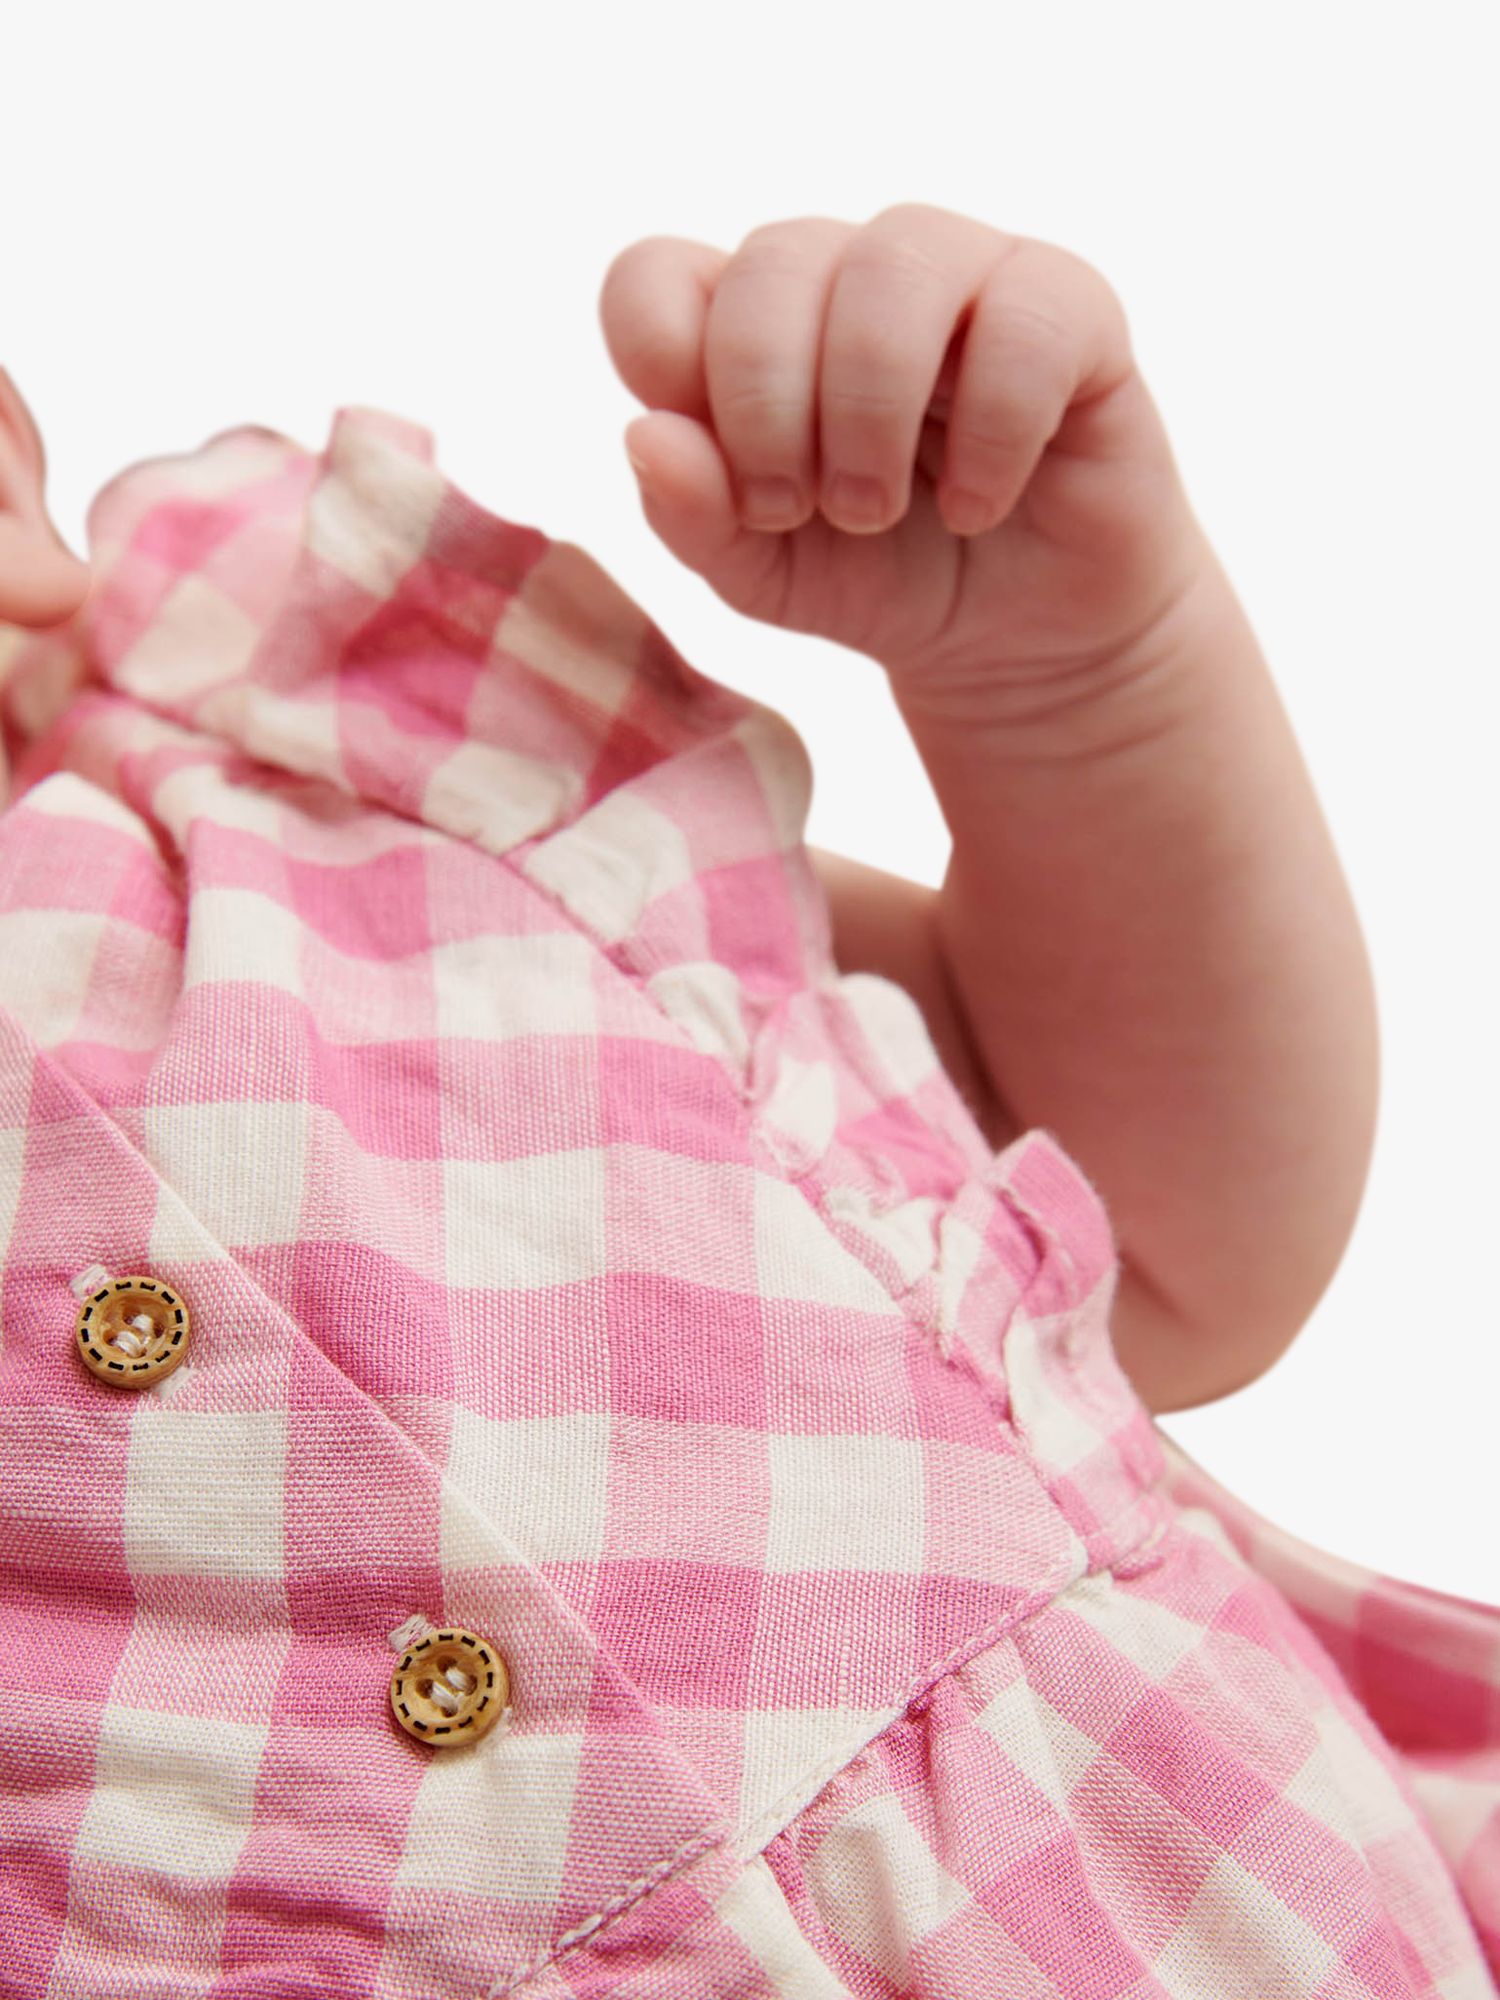 Purebaby Baby Organic Cotton Blend Gingham Romper, Pink, 3-6 months